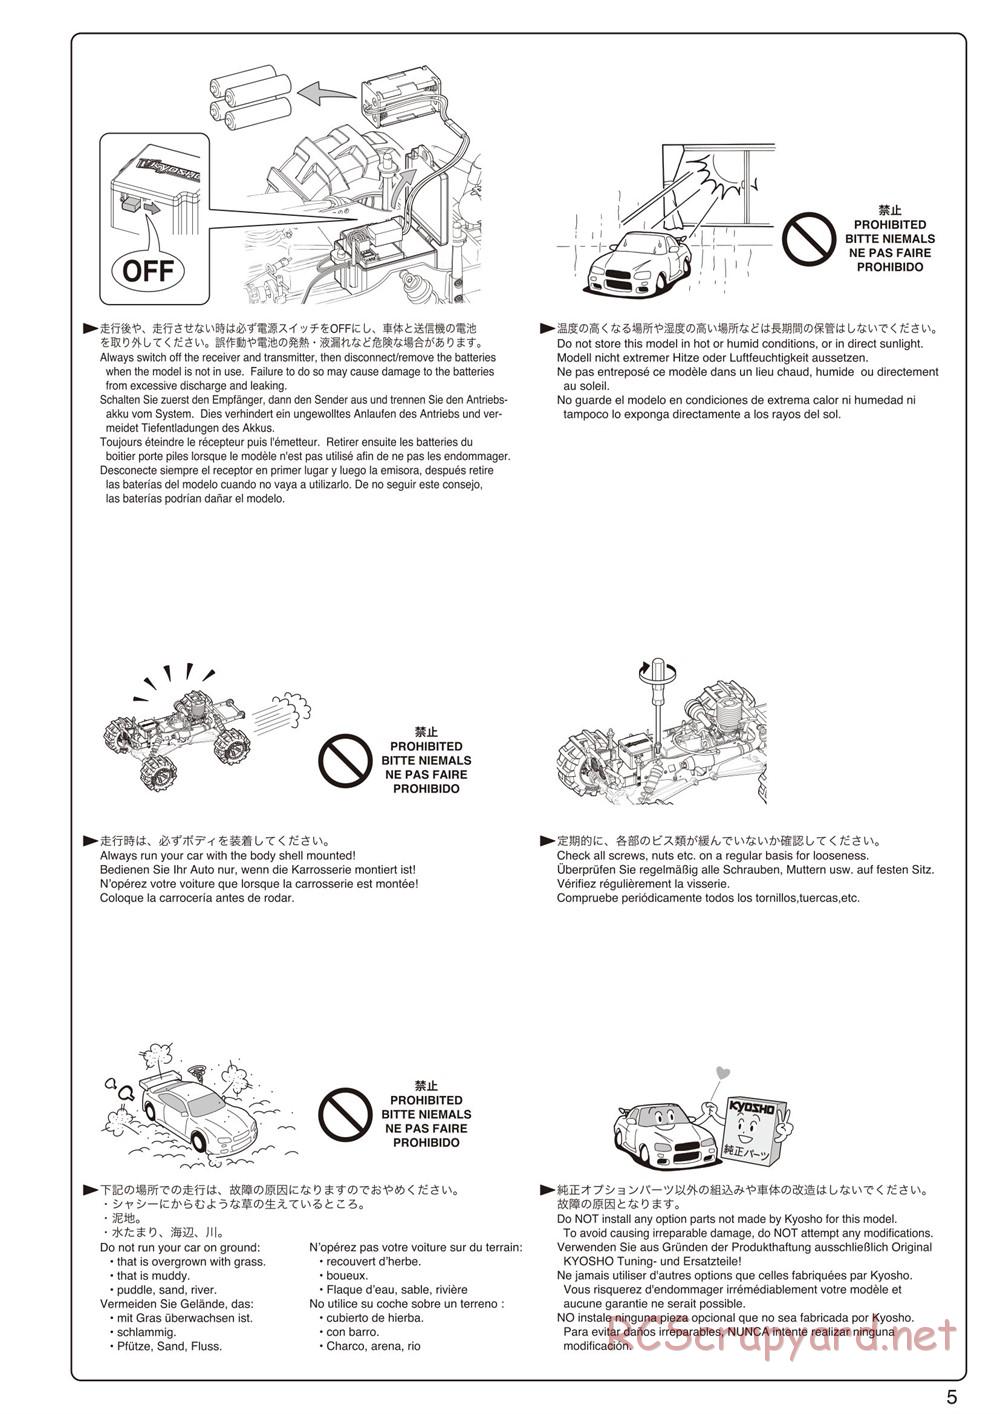 Kyosho - FO-XX GP - Manual - Page 5